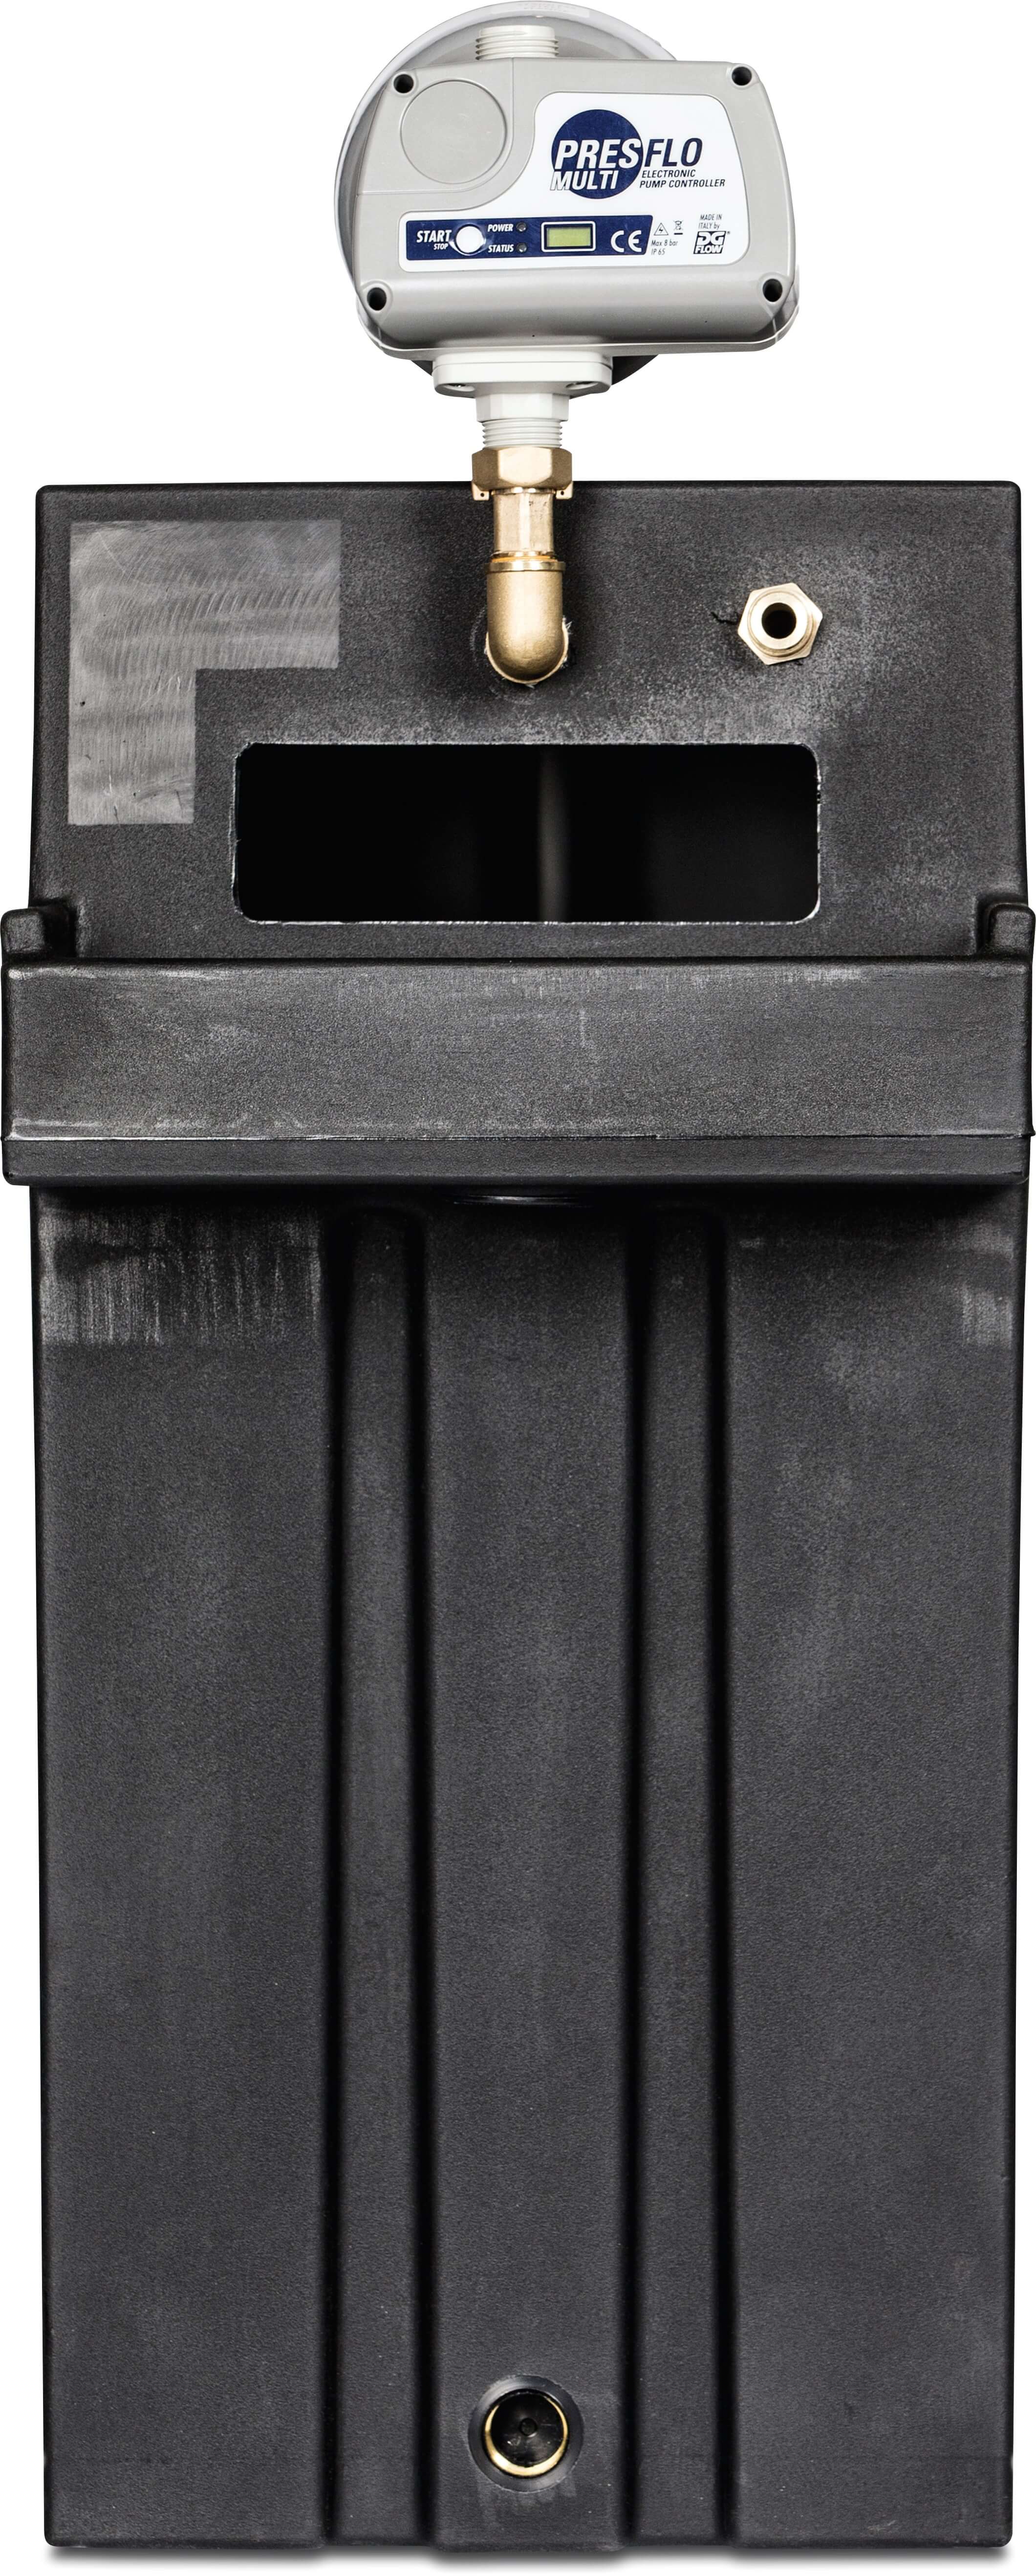 Zulaufbehälter 3/4" x 1" Außengewinde 230VAC BELGAQUA type Hecaton mit Minisub & Presflo-Multi